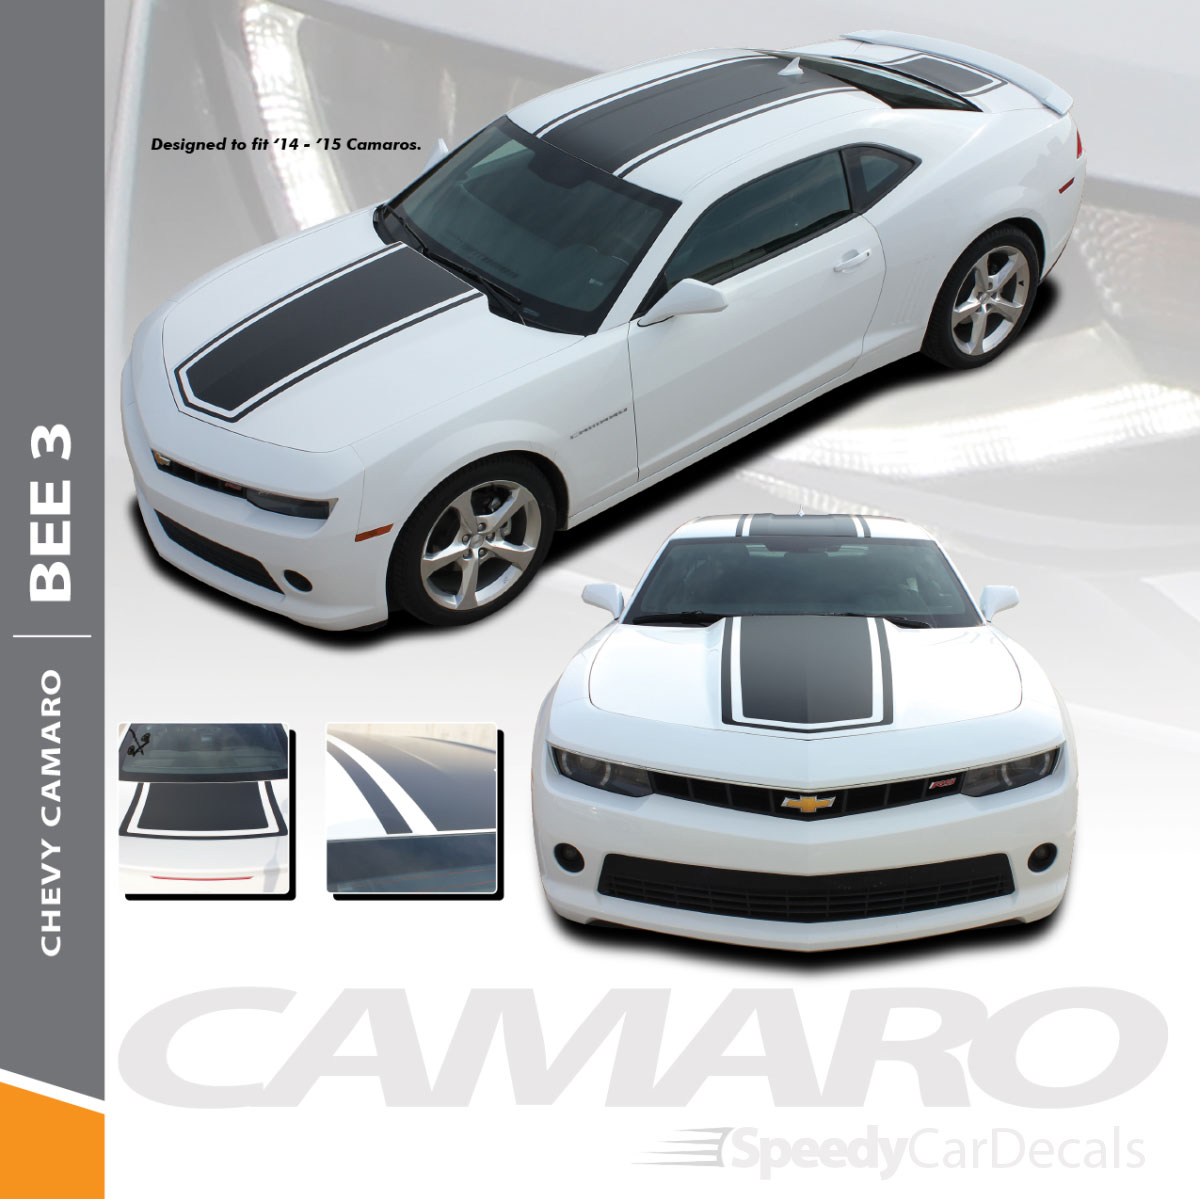 BEE 3 | Chevy Camaro Decal Stripes Center Graphic 2014-2015 Premium Auto Vinyl  Decals - SpeedyCarDecals - Fast Car Decals, Auto Decals, Auto Stripes,  Vehicle Specific Graphics